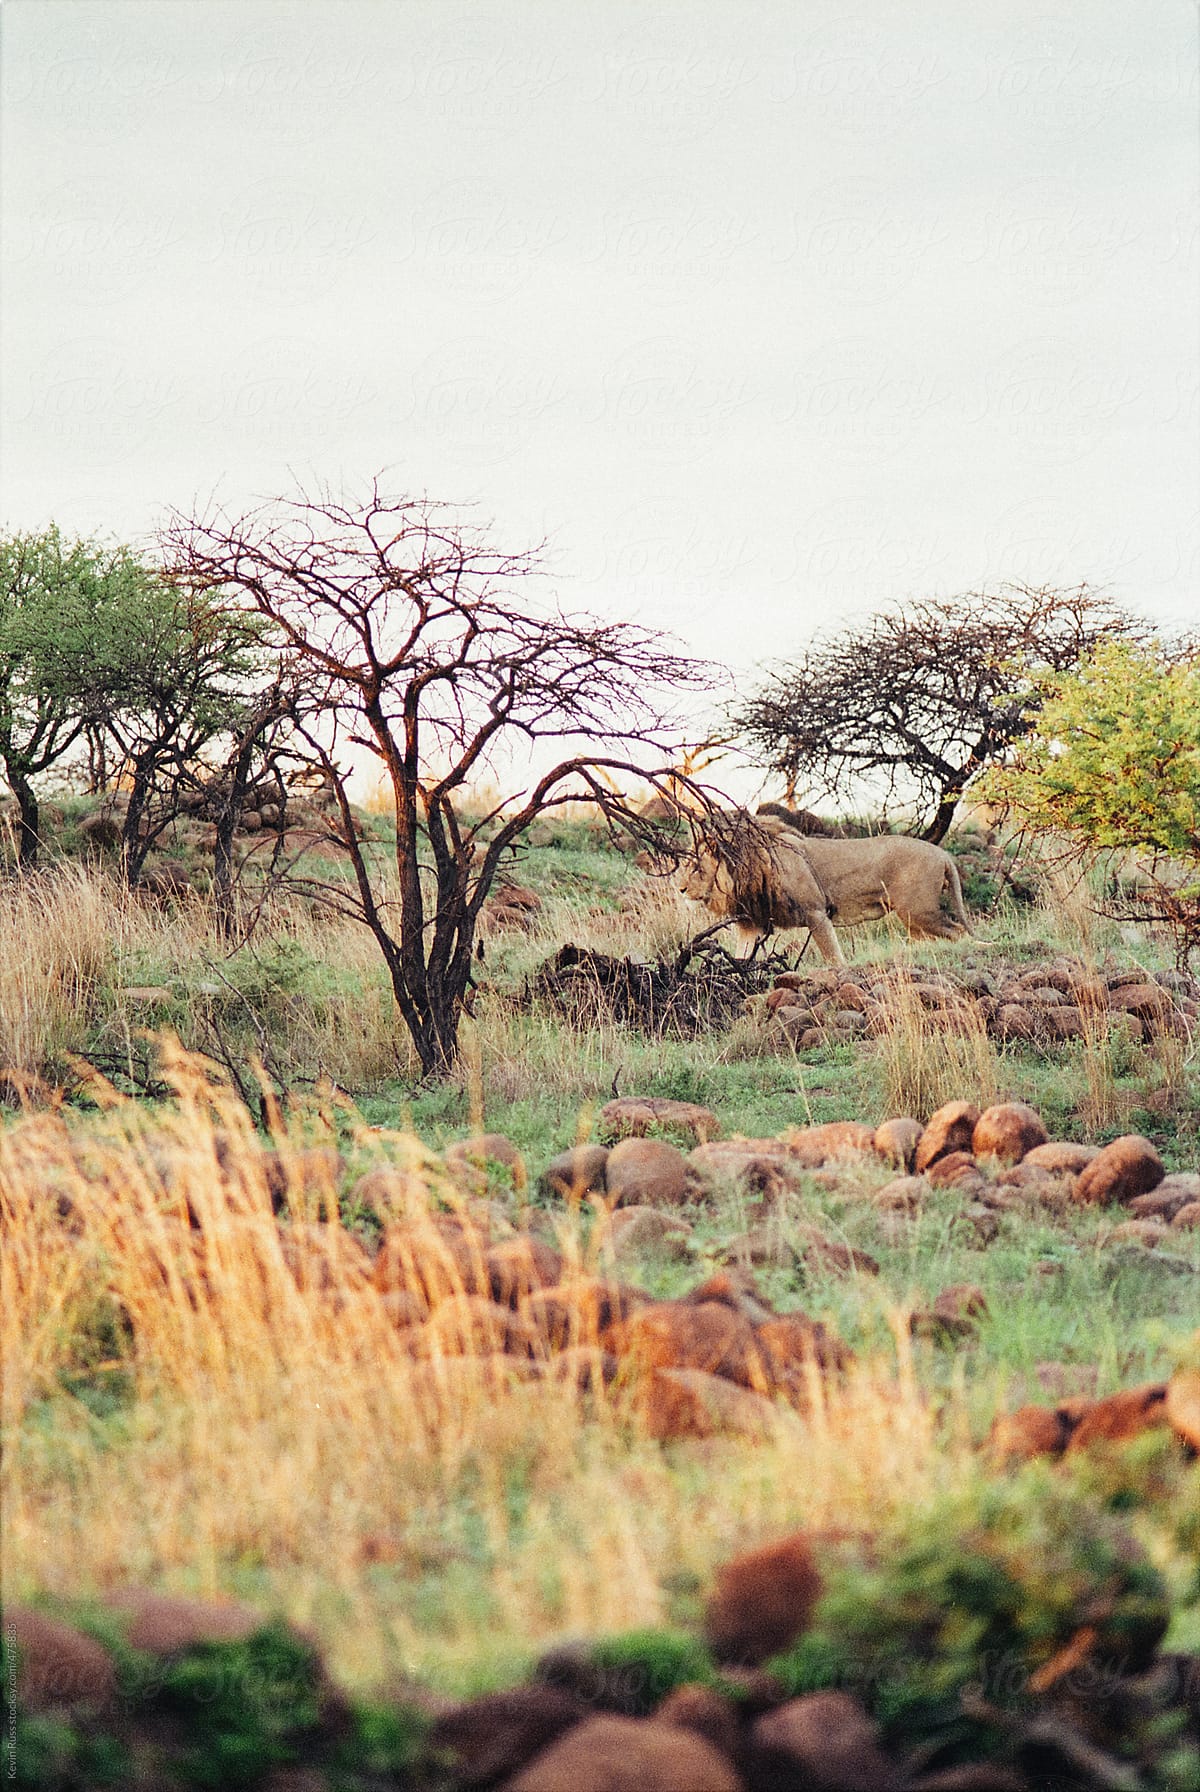 Male Lion Walks Behind Trees